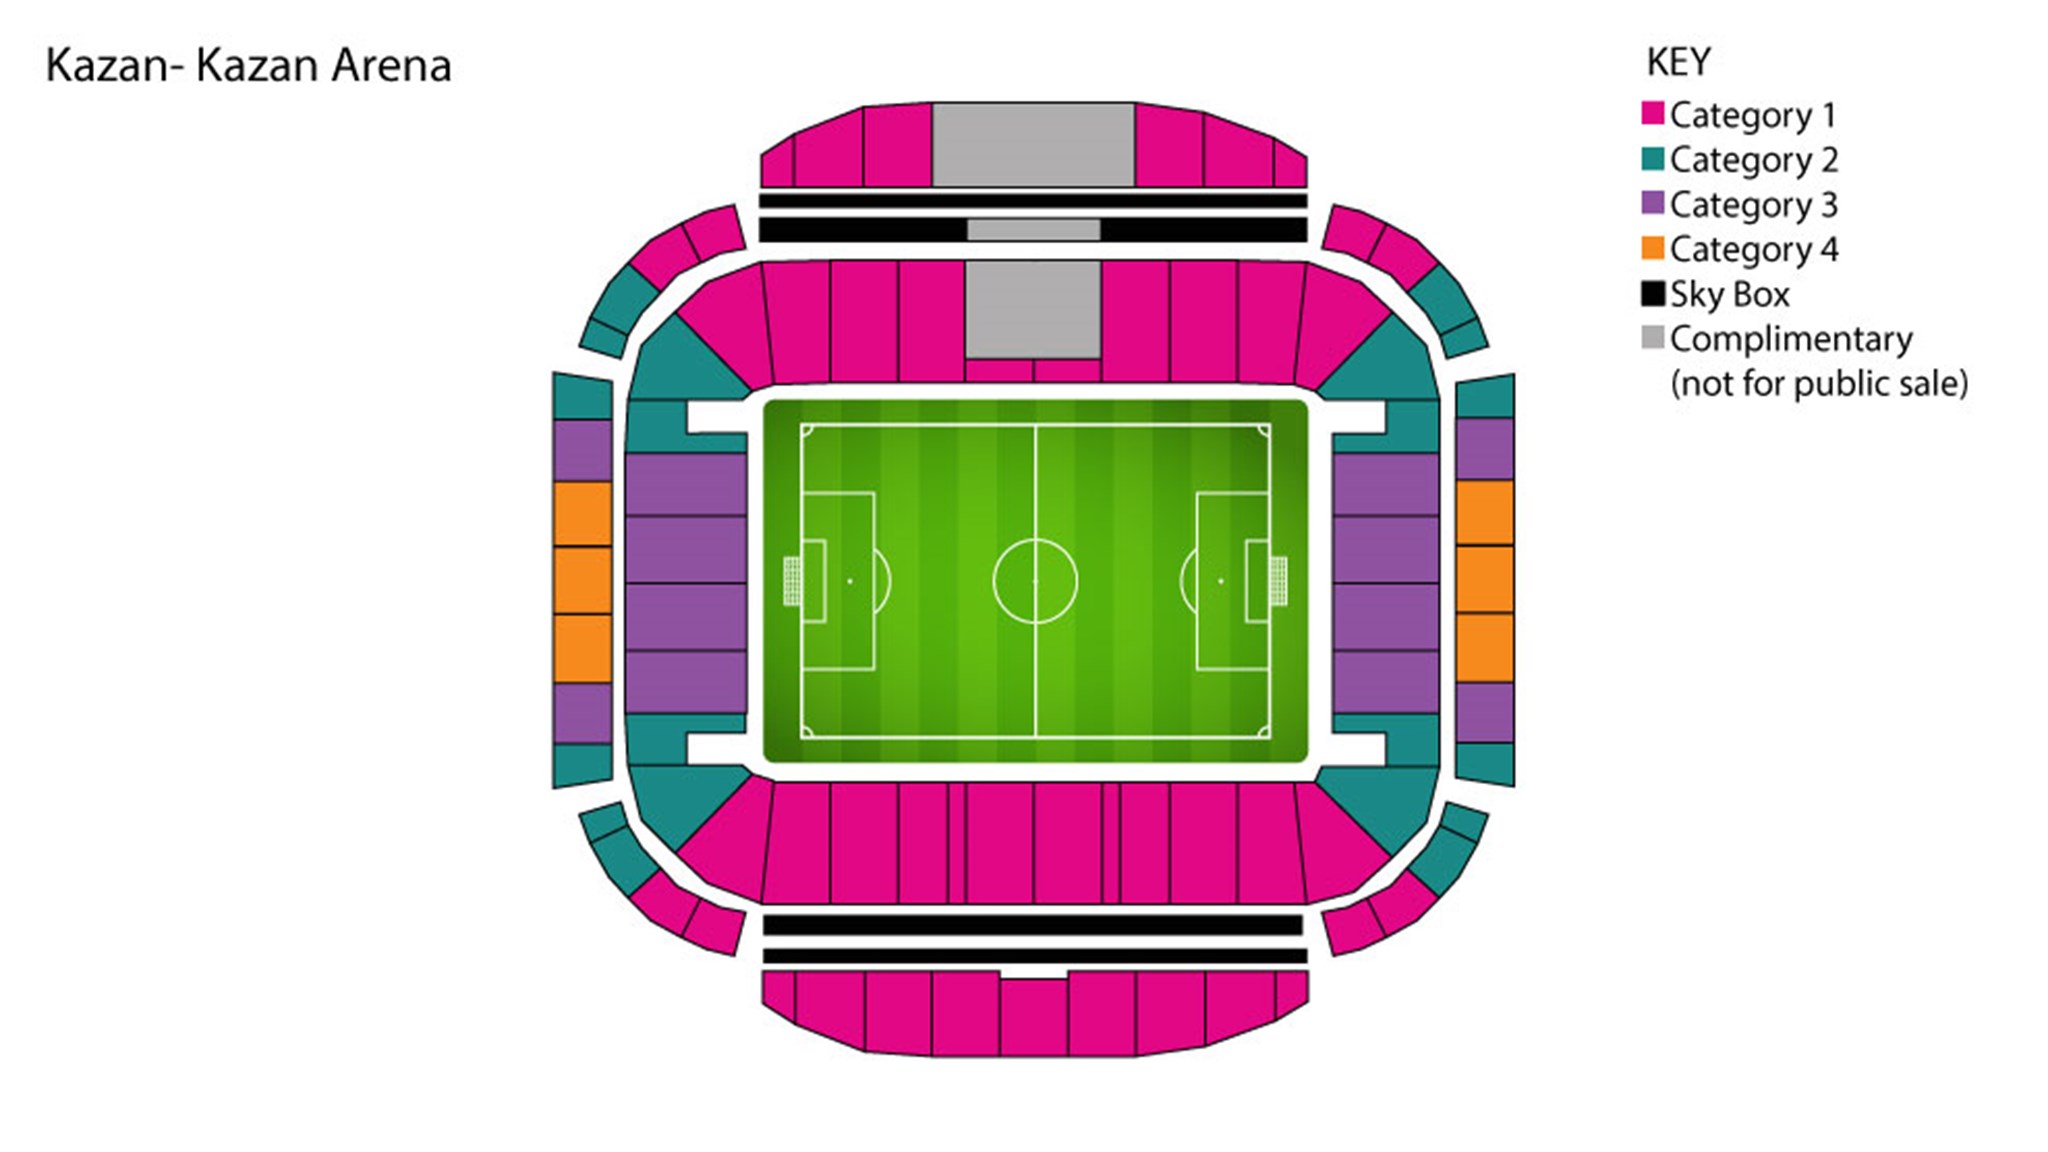 Стадион арена билеты. Казань Арена план стадиона. Категории билетов на стадионе. Билеты категории с. Стадион места категории.